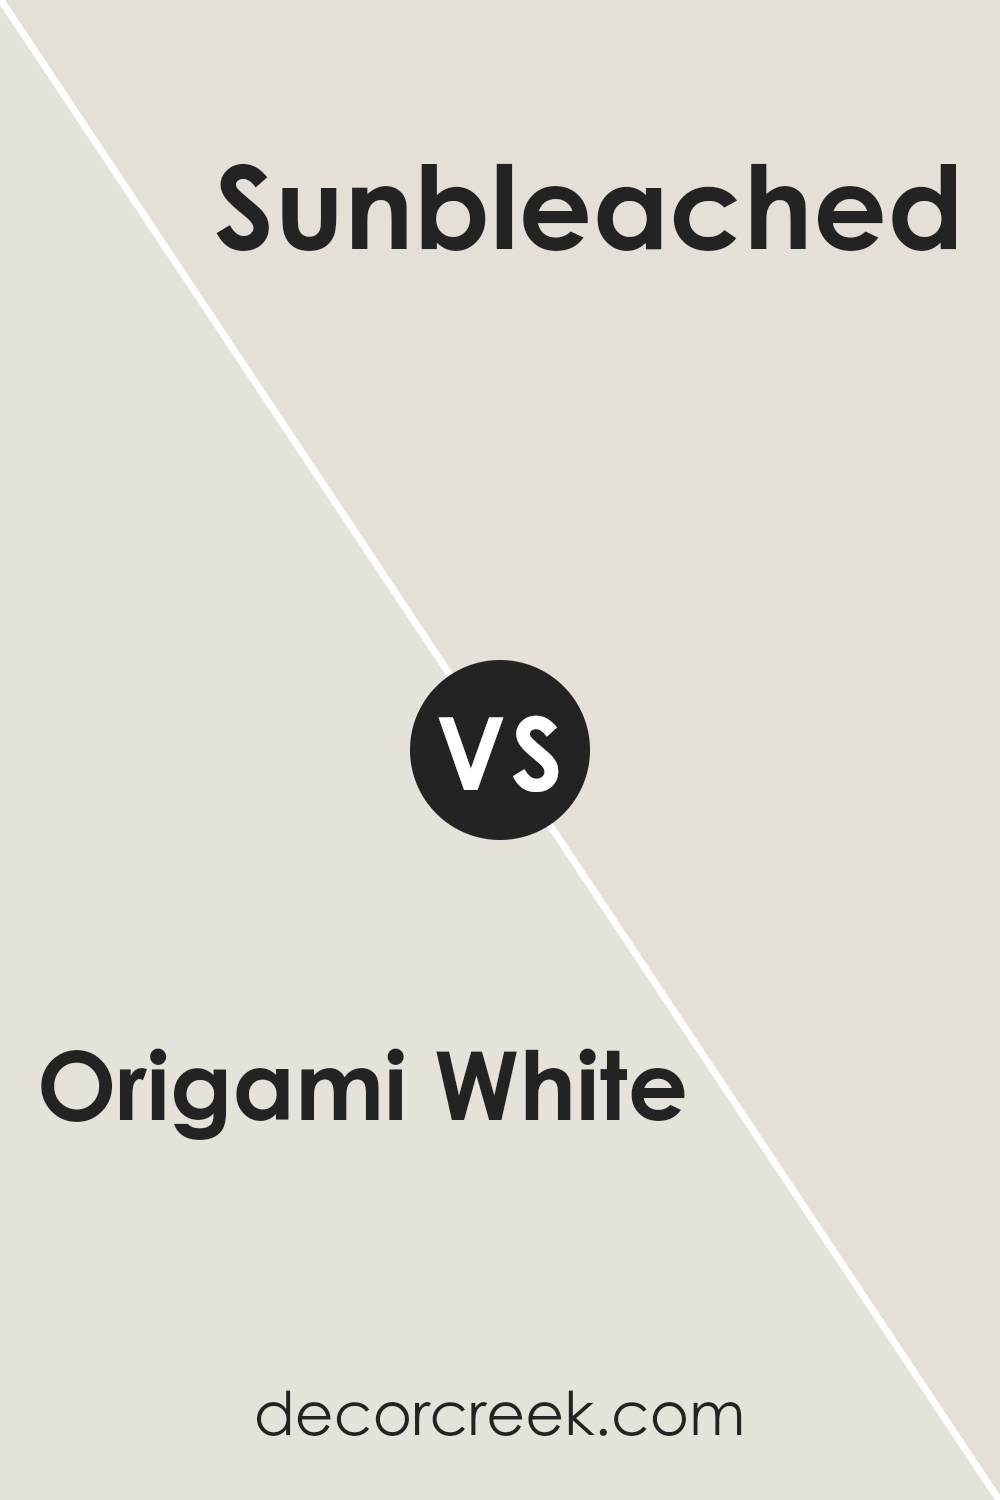 origami_white_sw_7636_vs_sunbleached_sw_9585